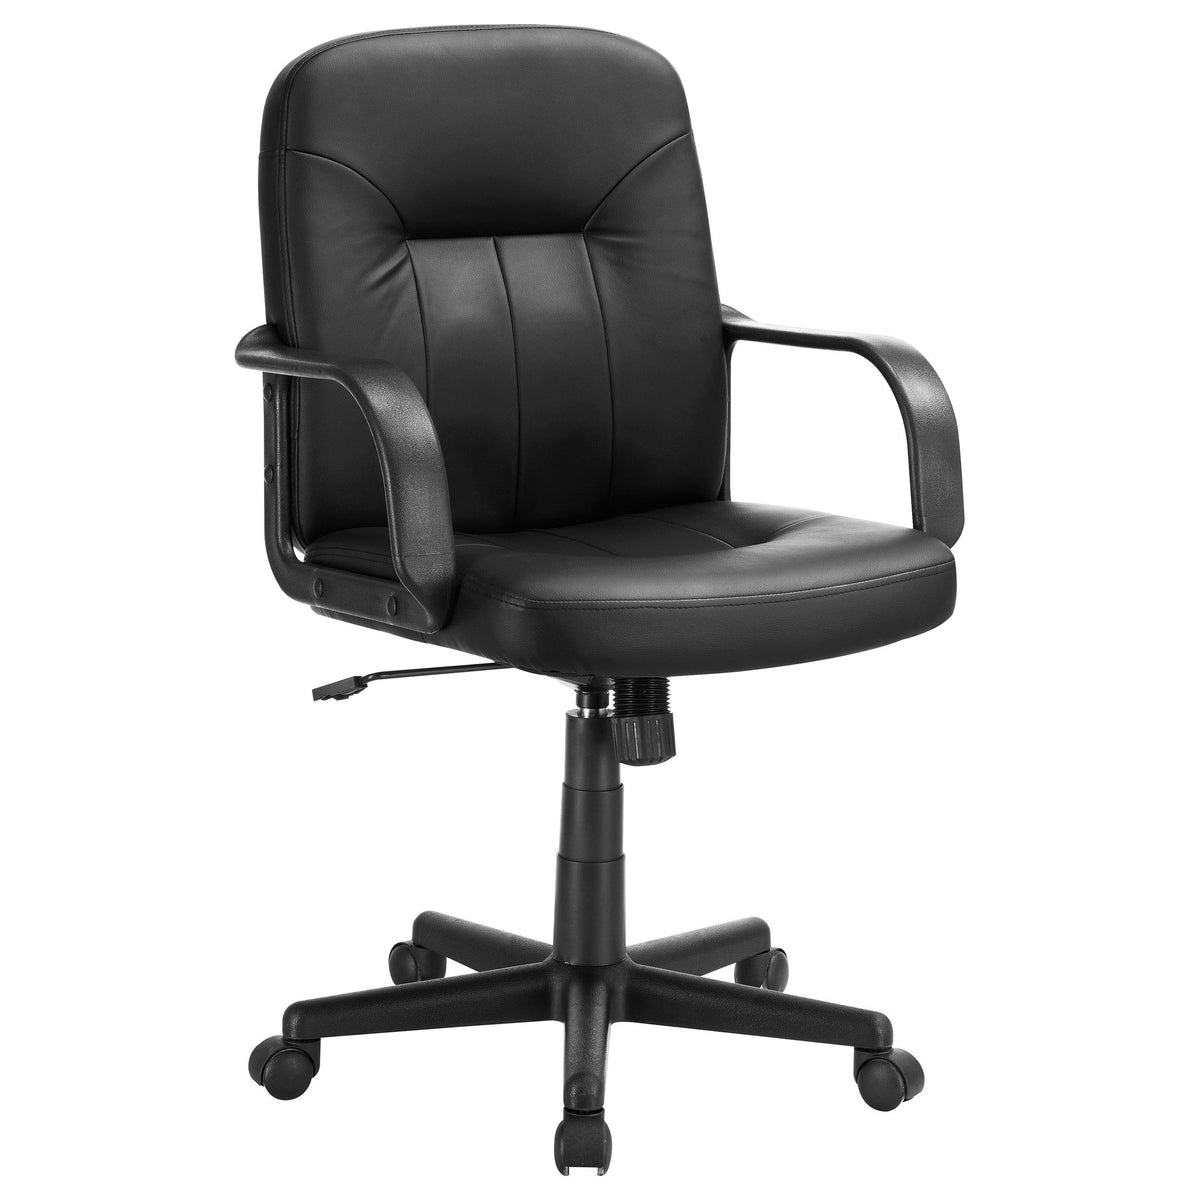 Minato Adjustable Height Office Chair Black Minato Adjustable Height Office Chair Black Half Price Furniture